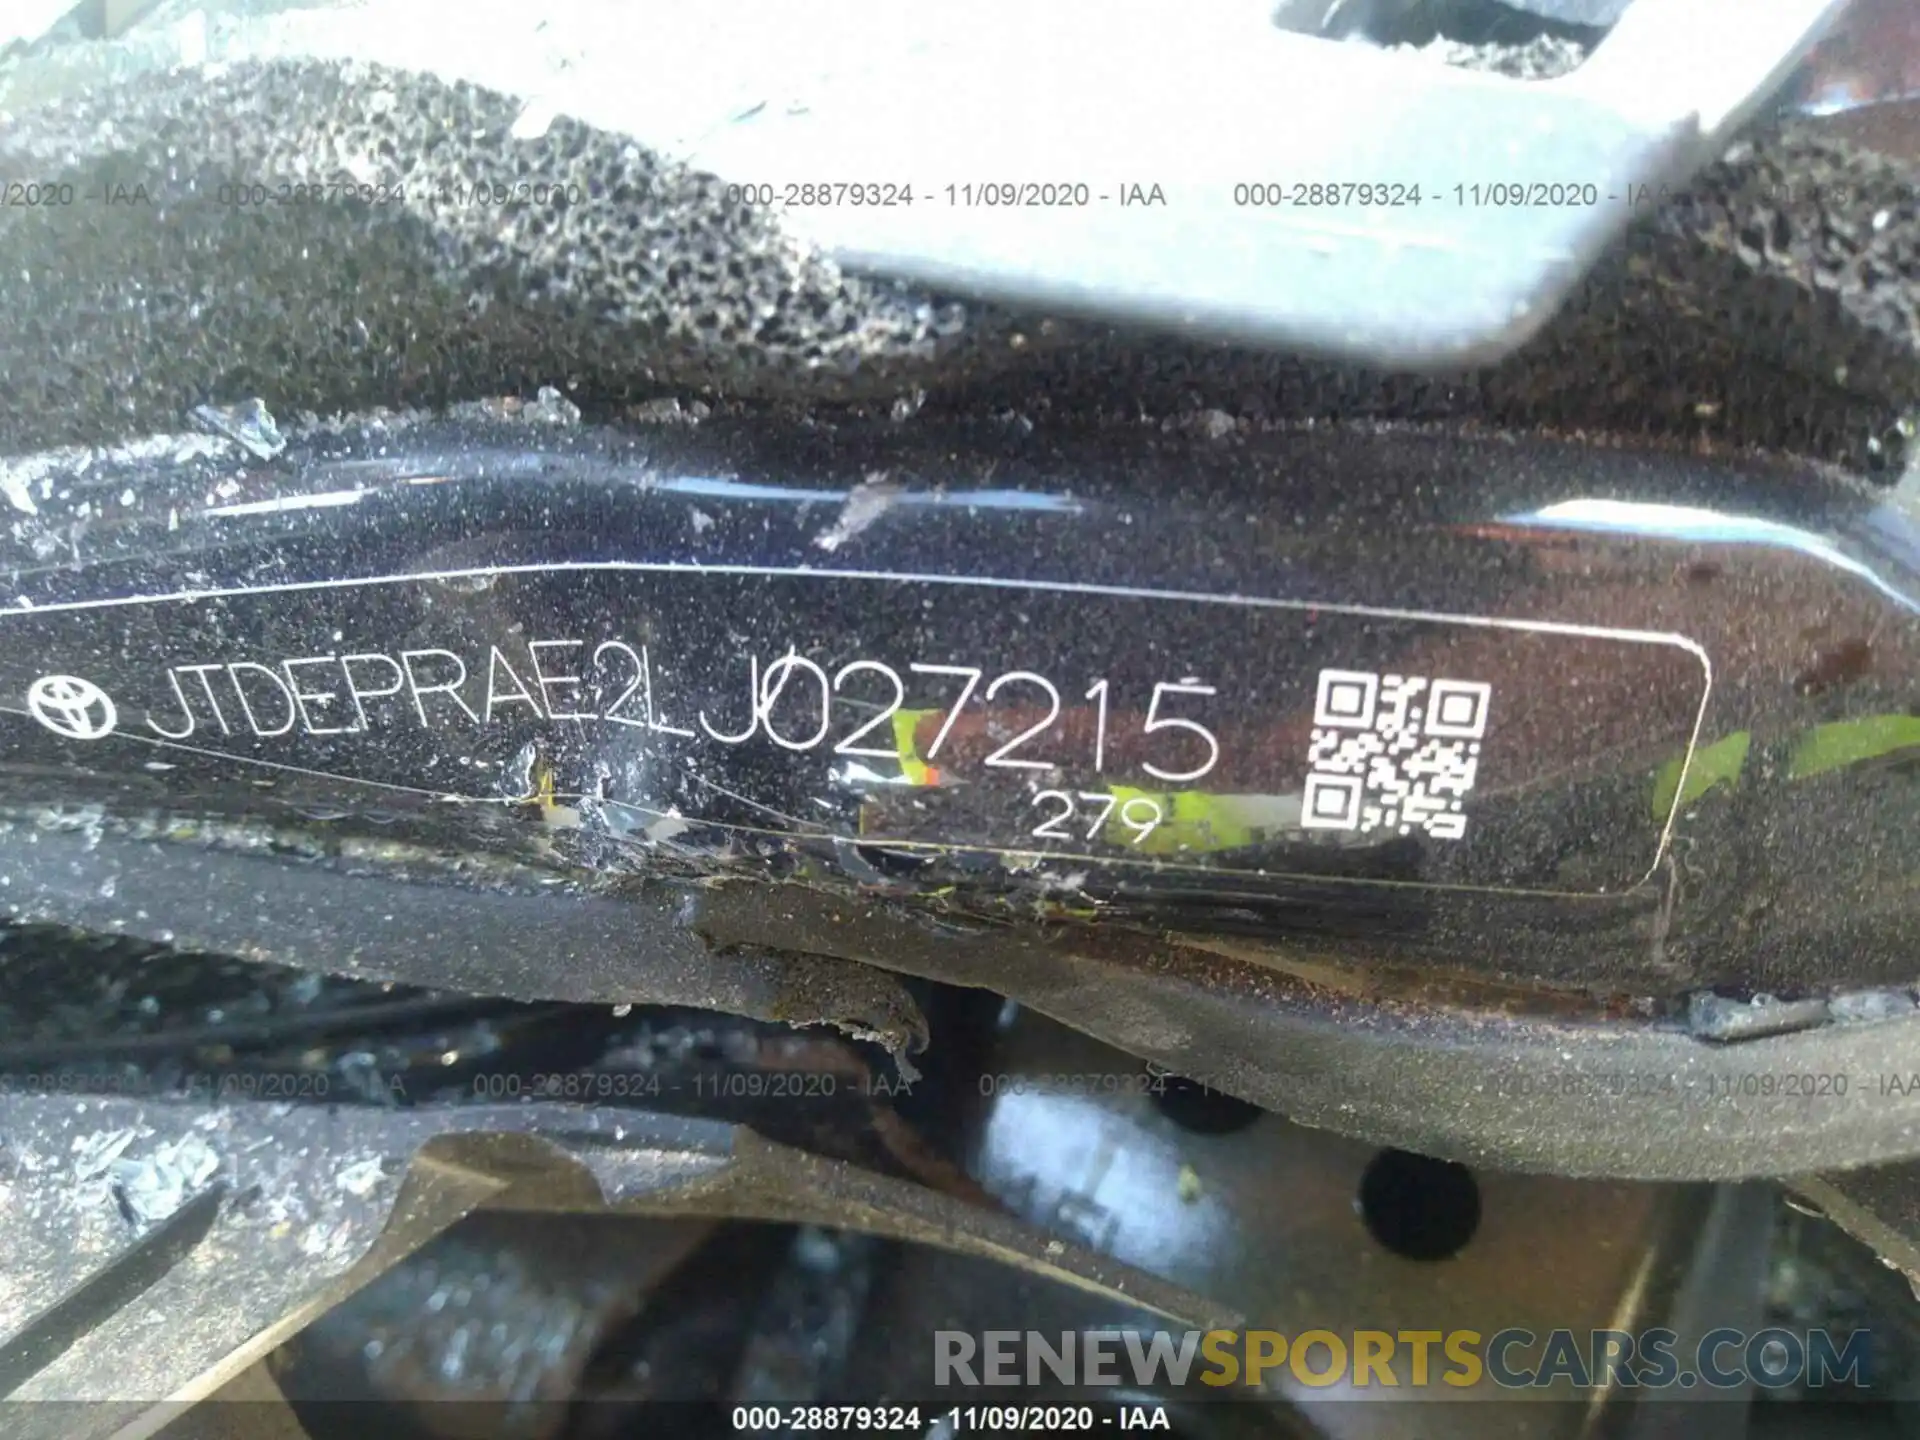 9 Photograph of a damaged car JTDEPRAE2LJ027215 TOYOTA COROLLA 2020